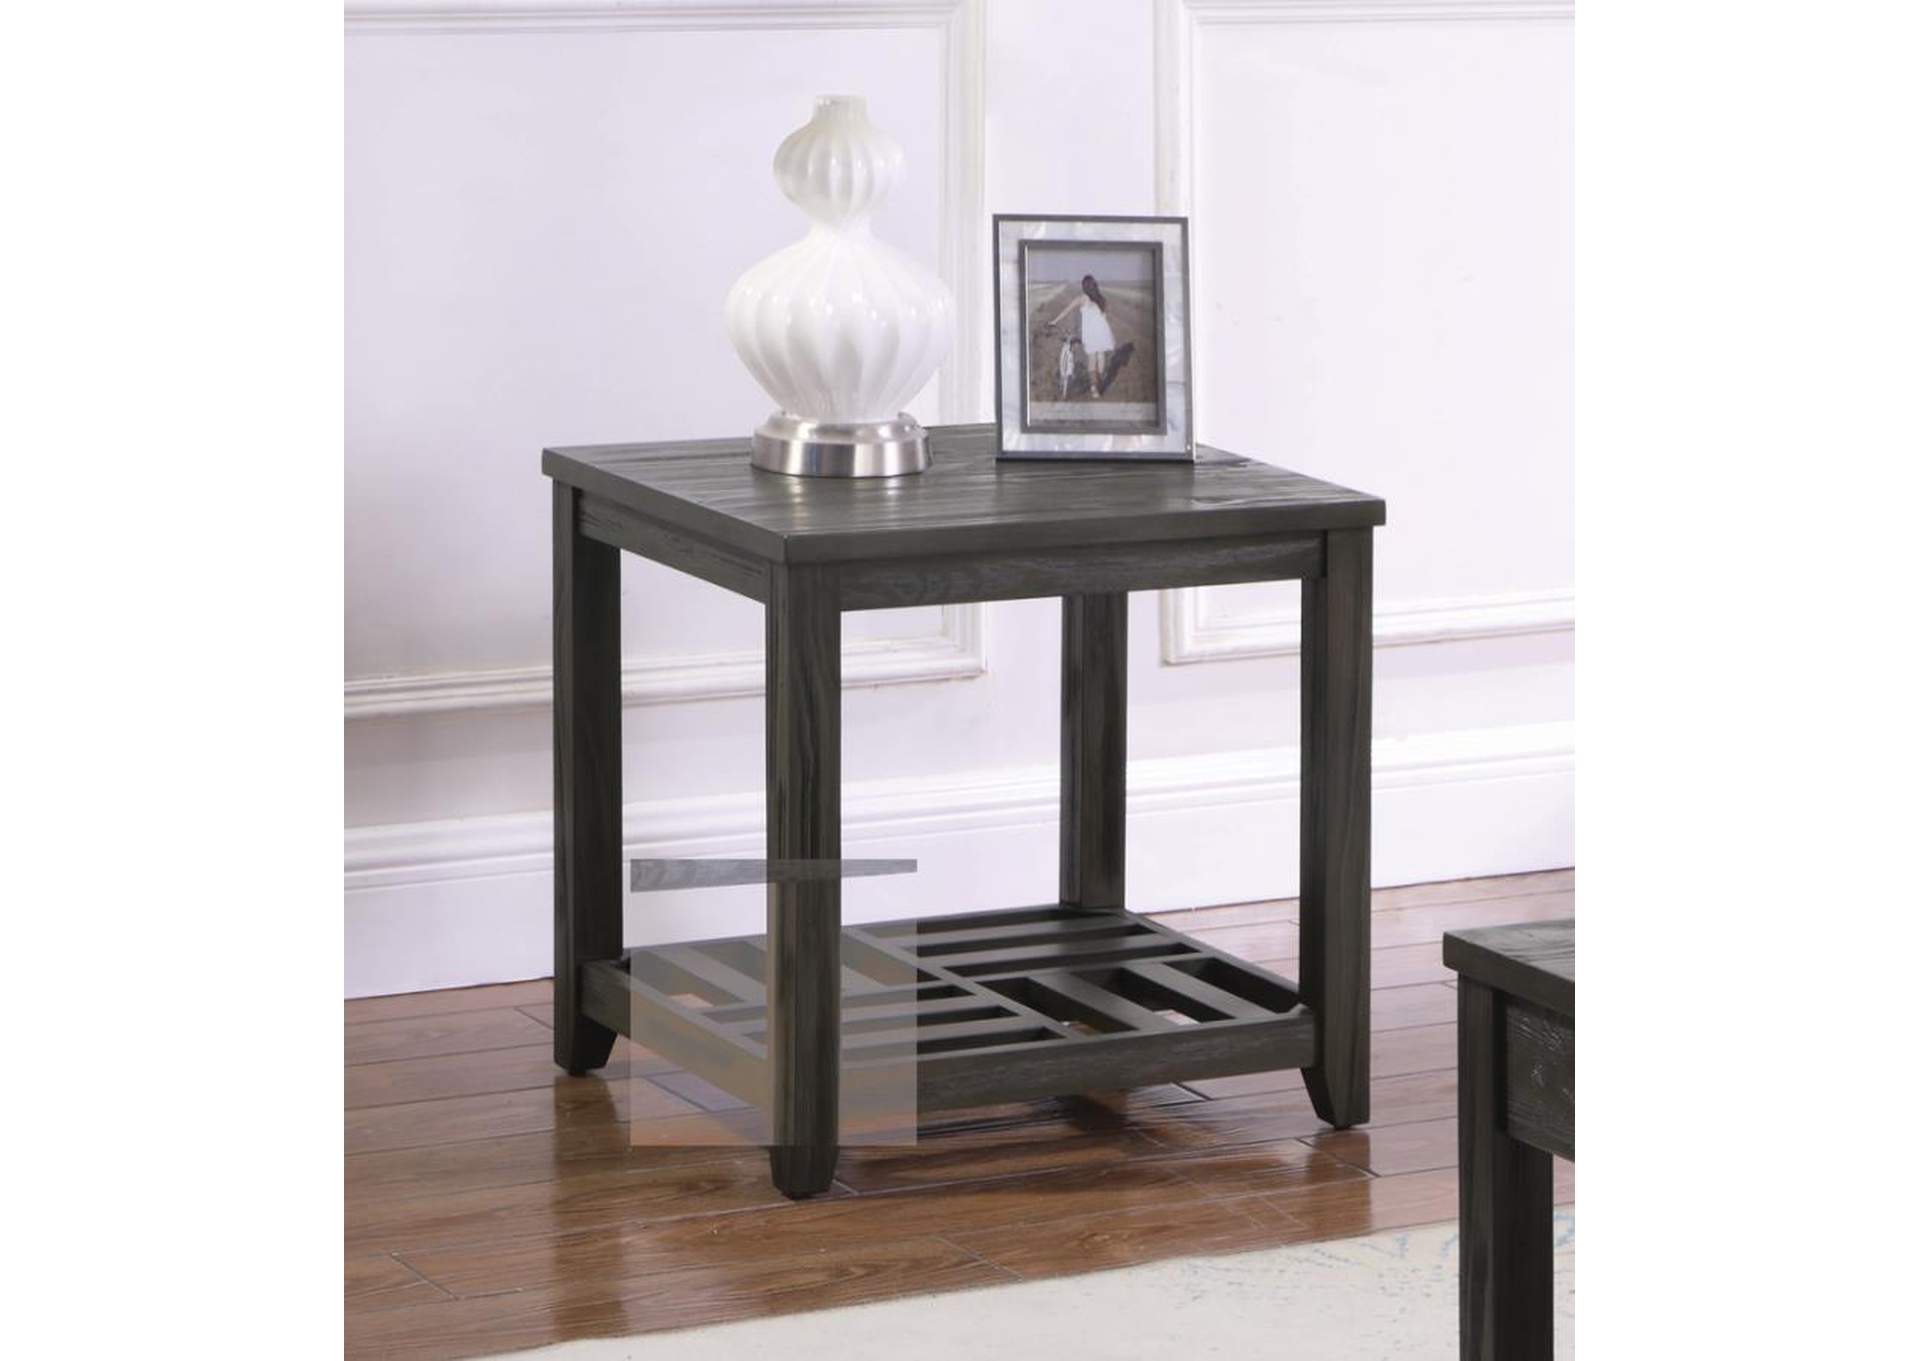 1-shelf Rectangular End Table Grey,Coaster Furniture